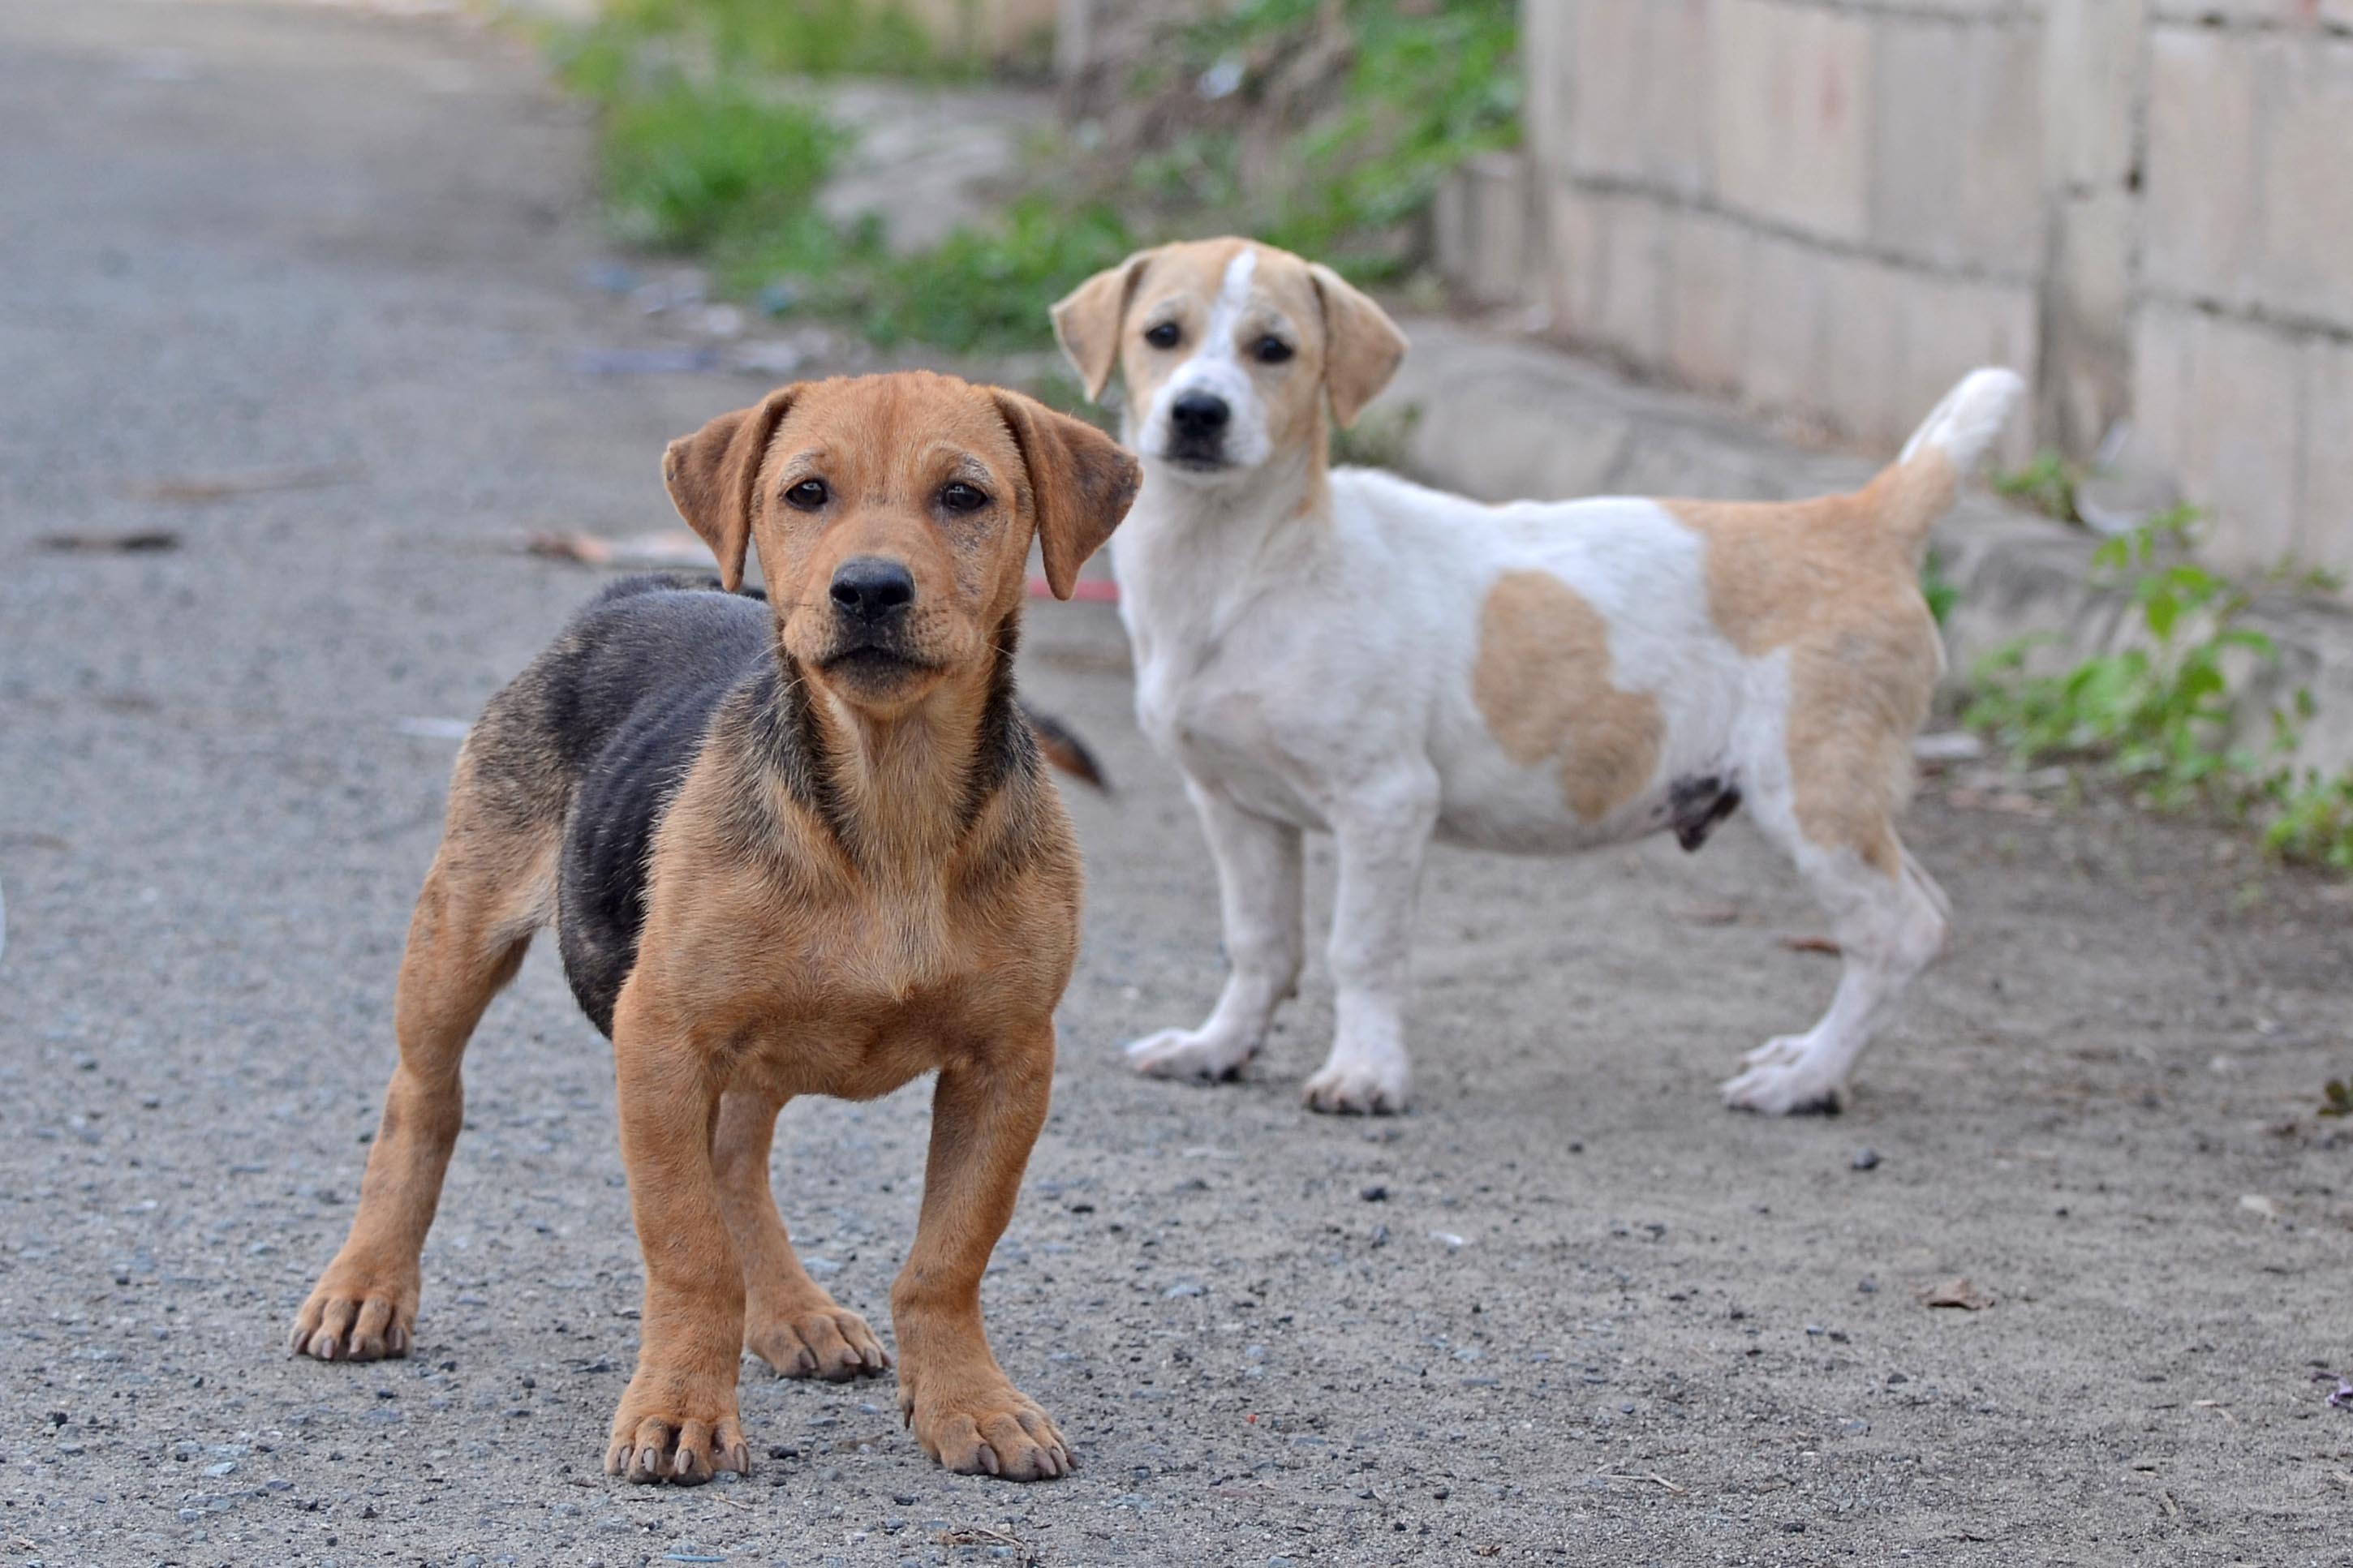 File:Flickr - ggallice - Street dogs (1).jpg - Wikimedia Commons